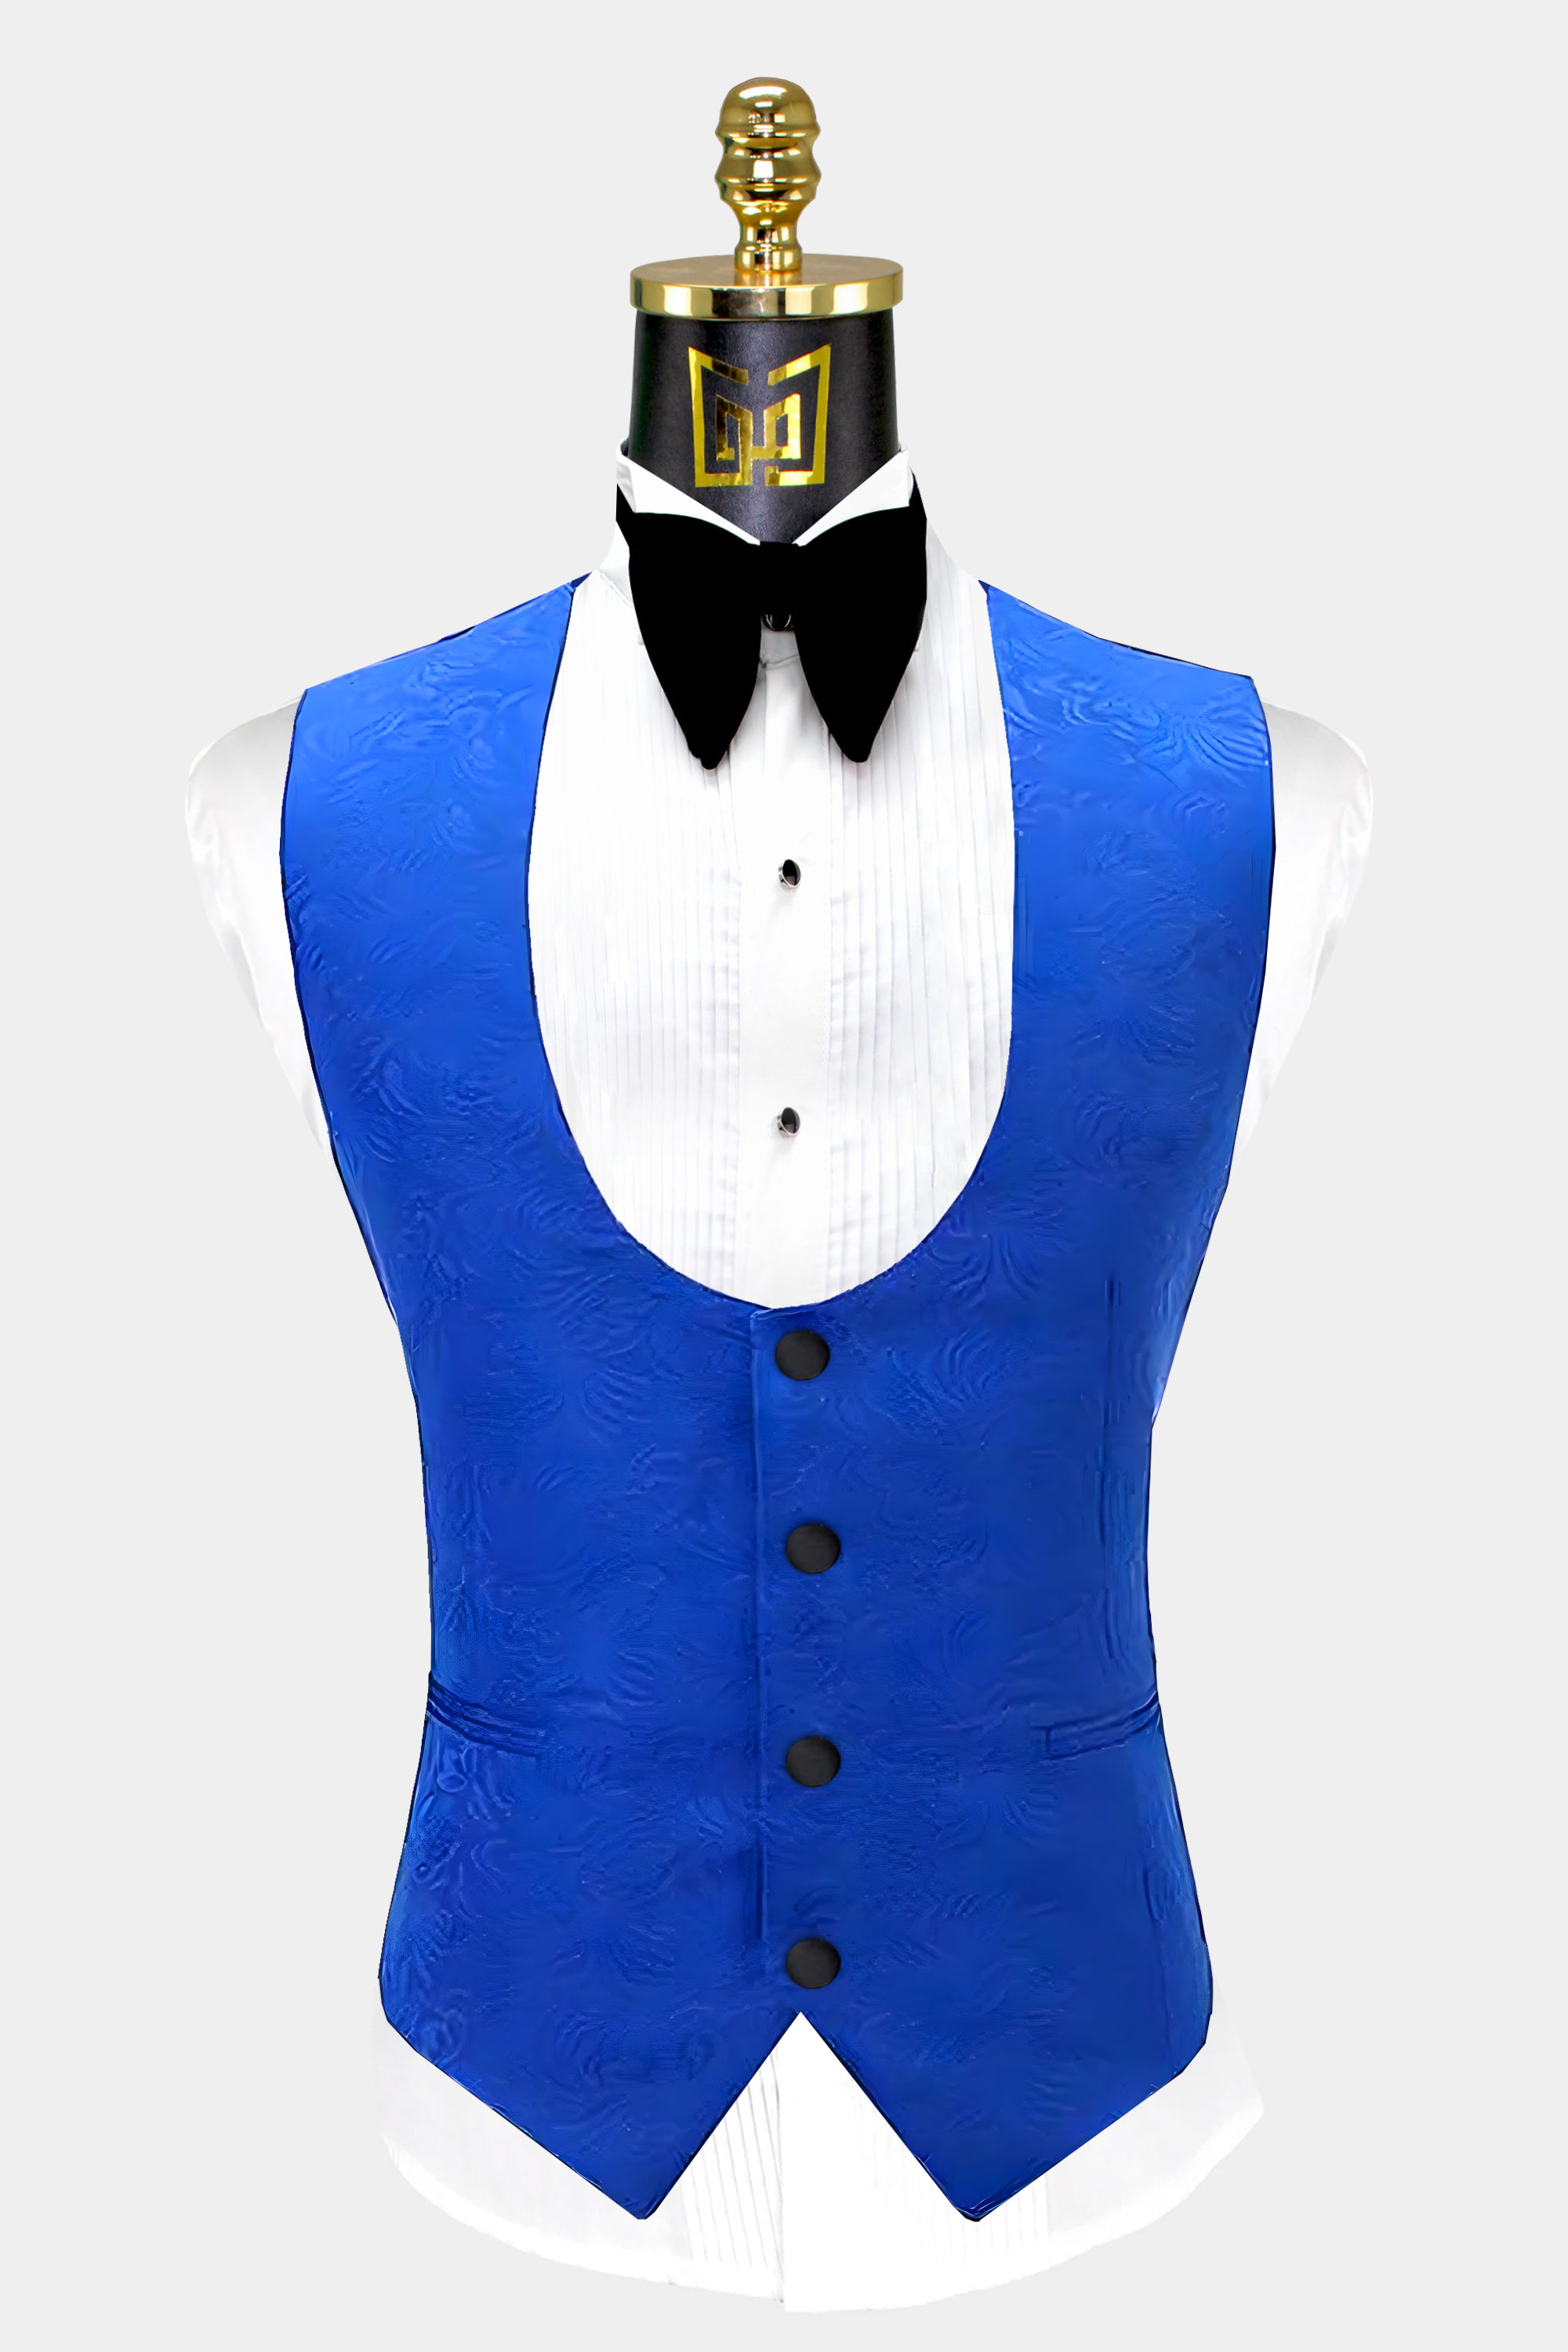 Royal-Blue-and-Black-Tuxedo-Vest-Wedding-Waistcoat-from-Gentlemansguru.com